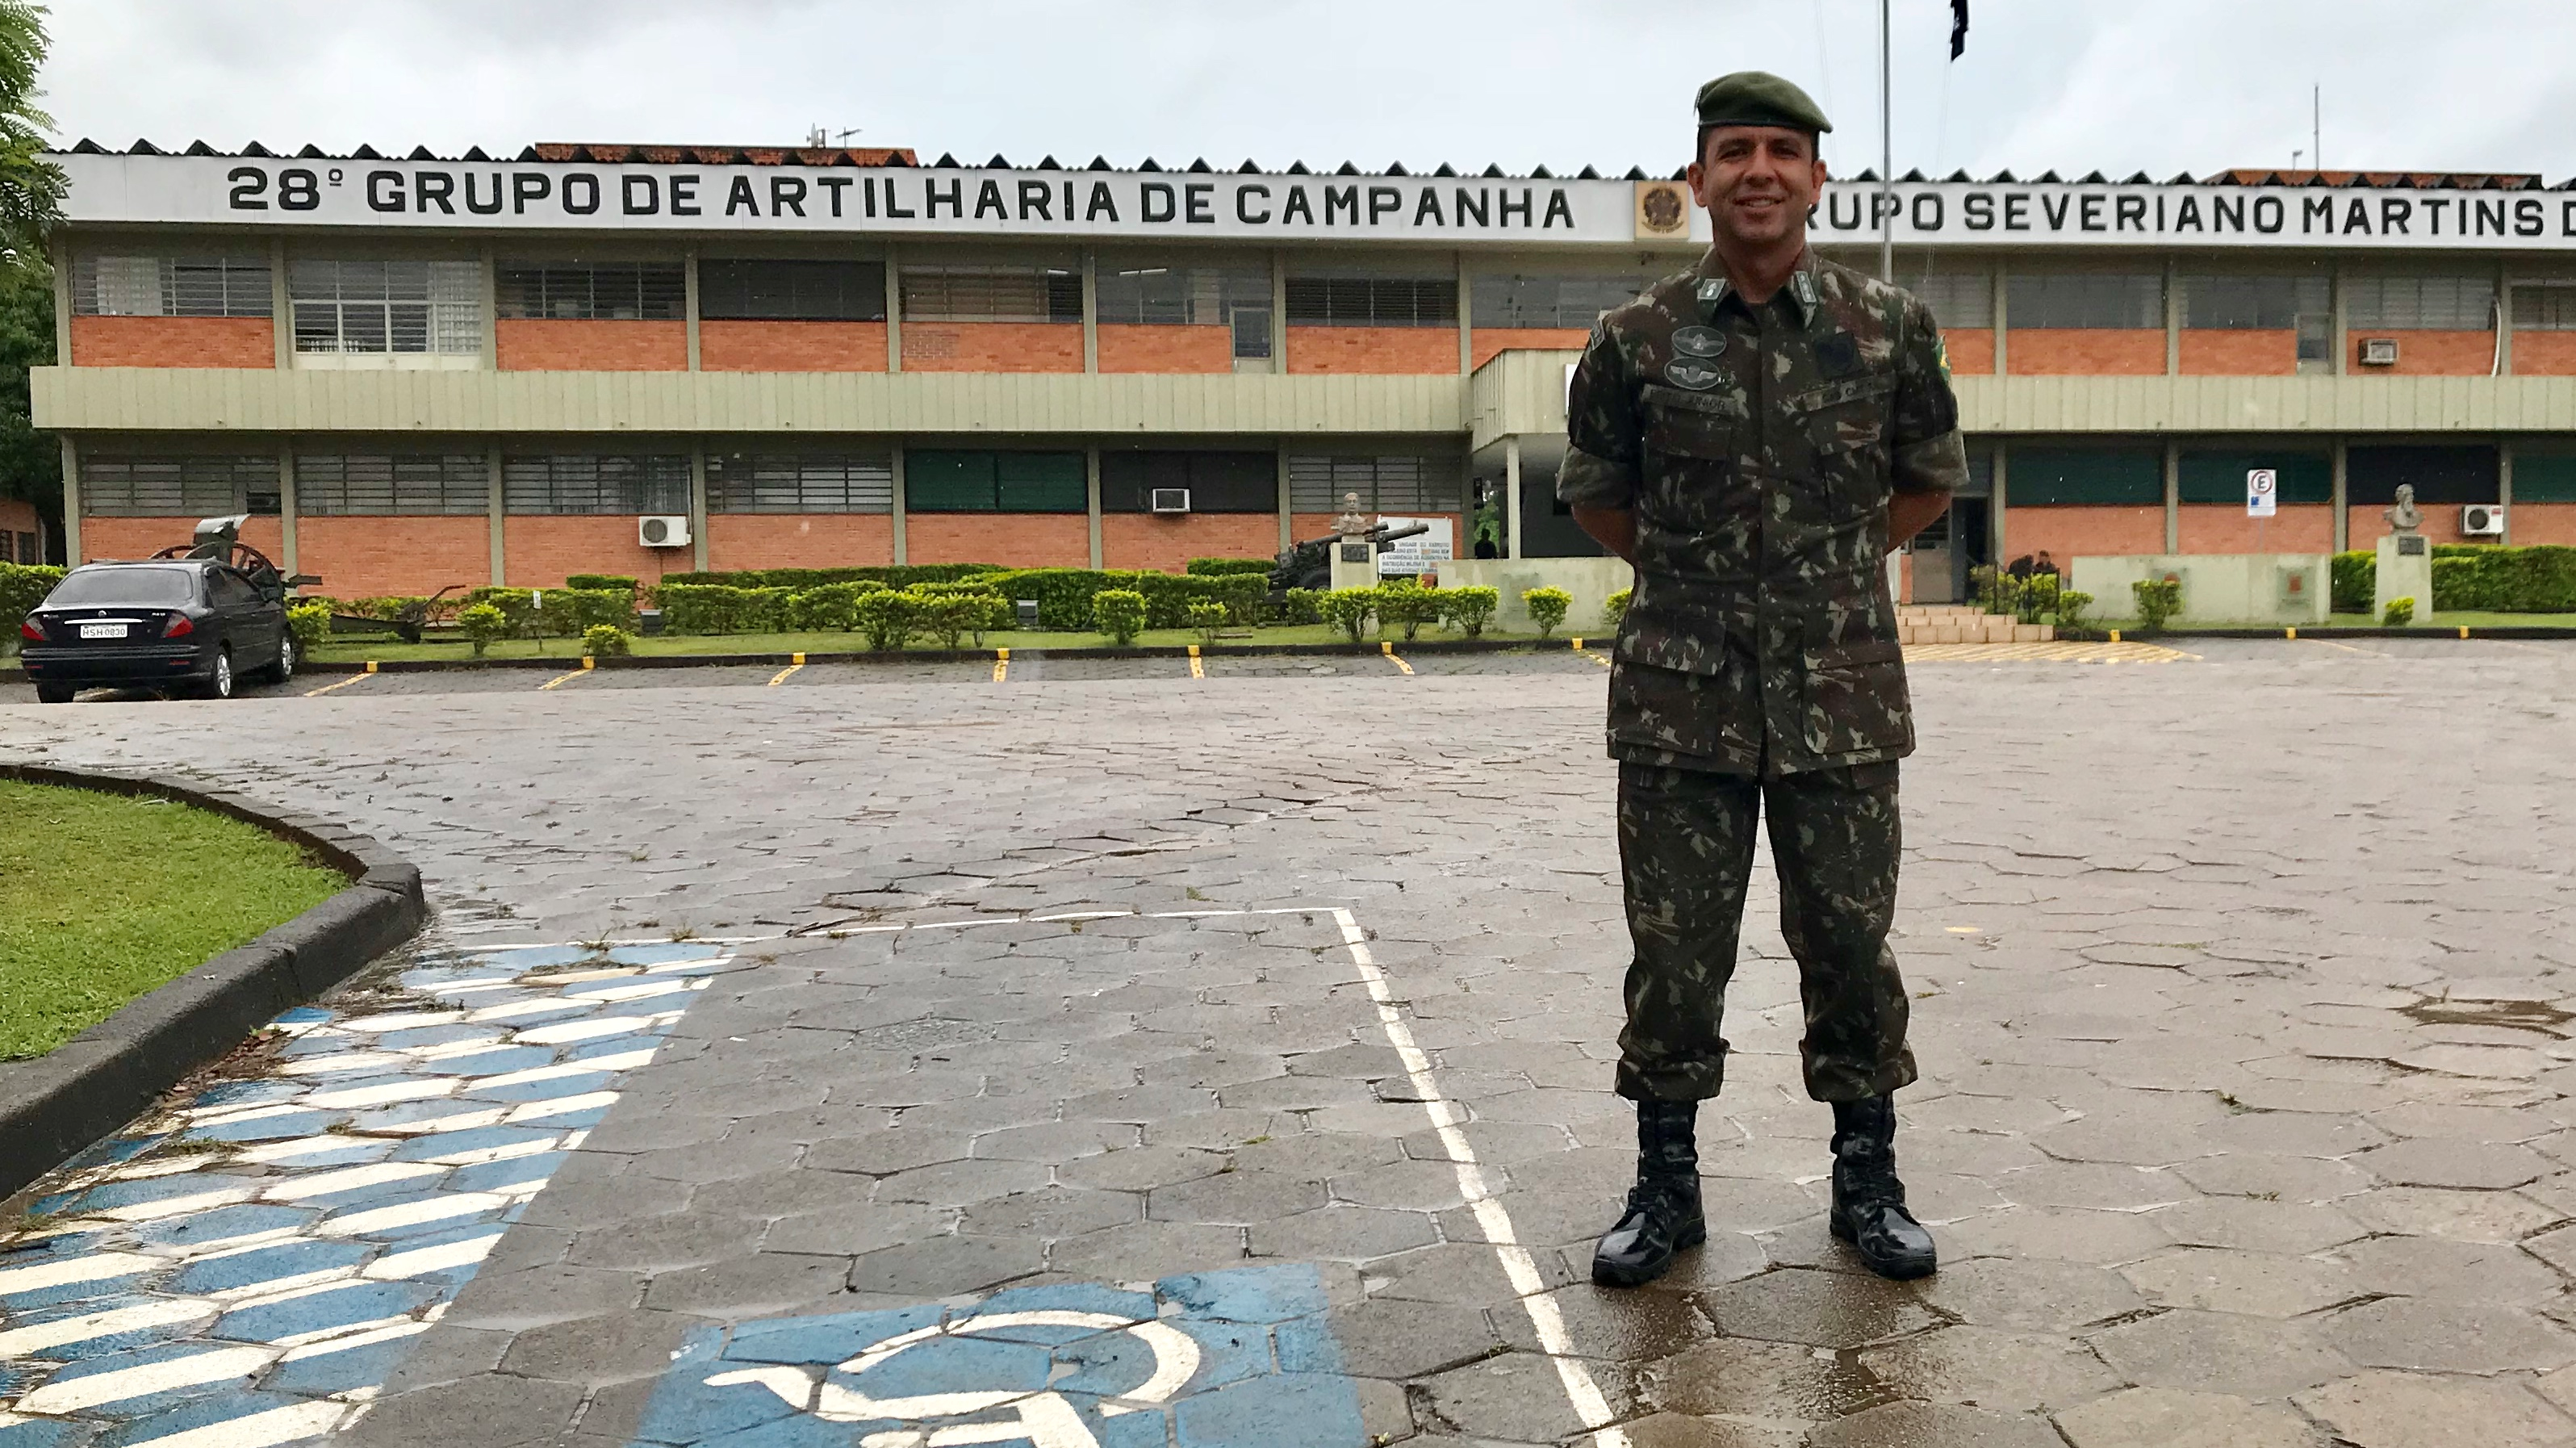 Tenente Coronel José Evanio Cavalcante Brito Junior, de Presidente Prudente, comandará o 28º Grupo de Artilharia de Campanha, a partir de janeiro